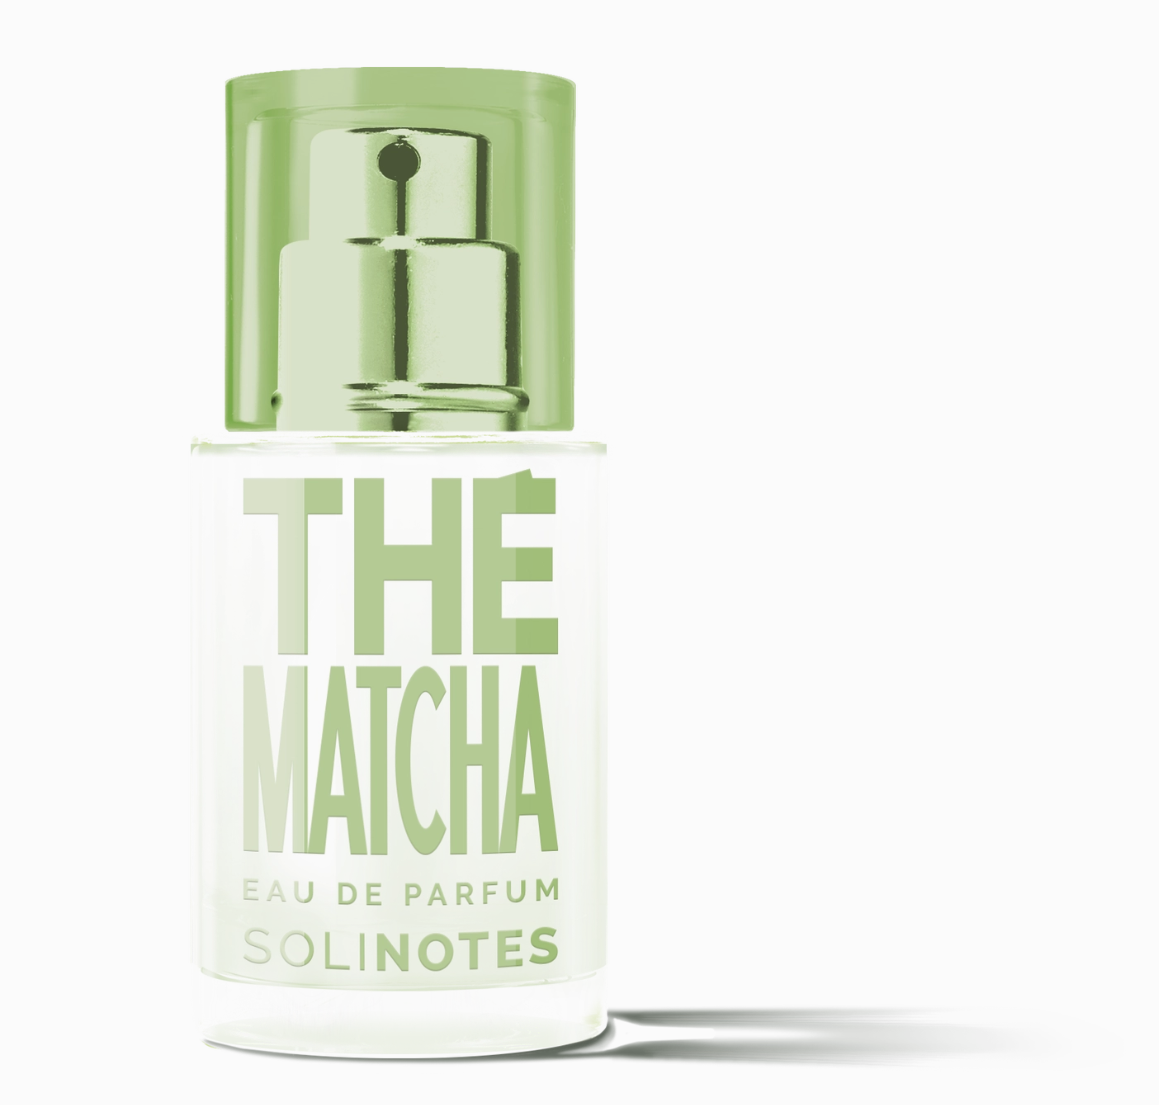 Mini Matcha Tea Eau de Parfum 0.5 oz - CLEAN BEAUTY